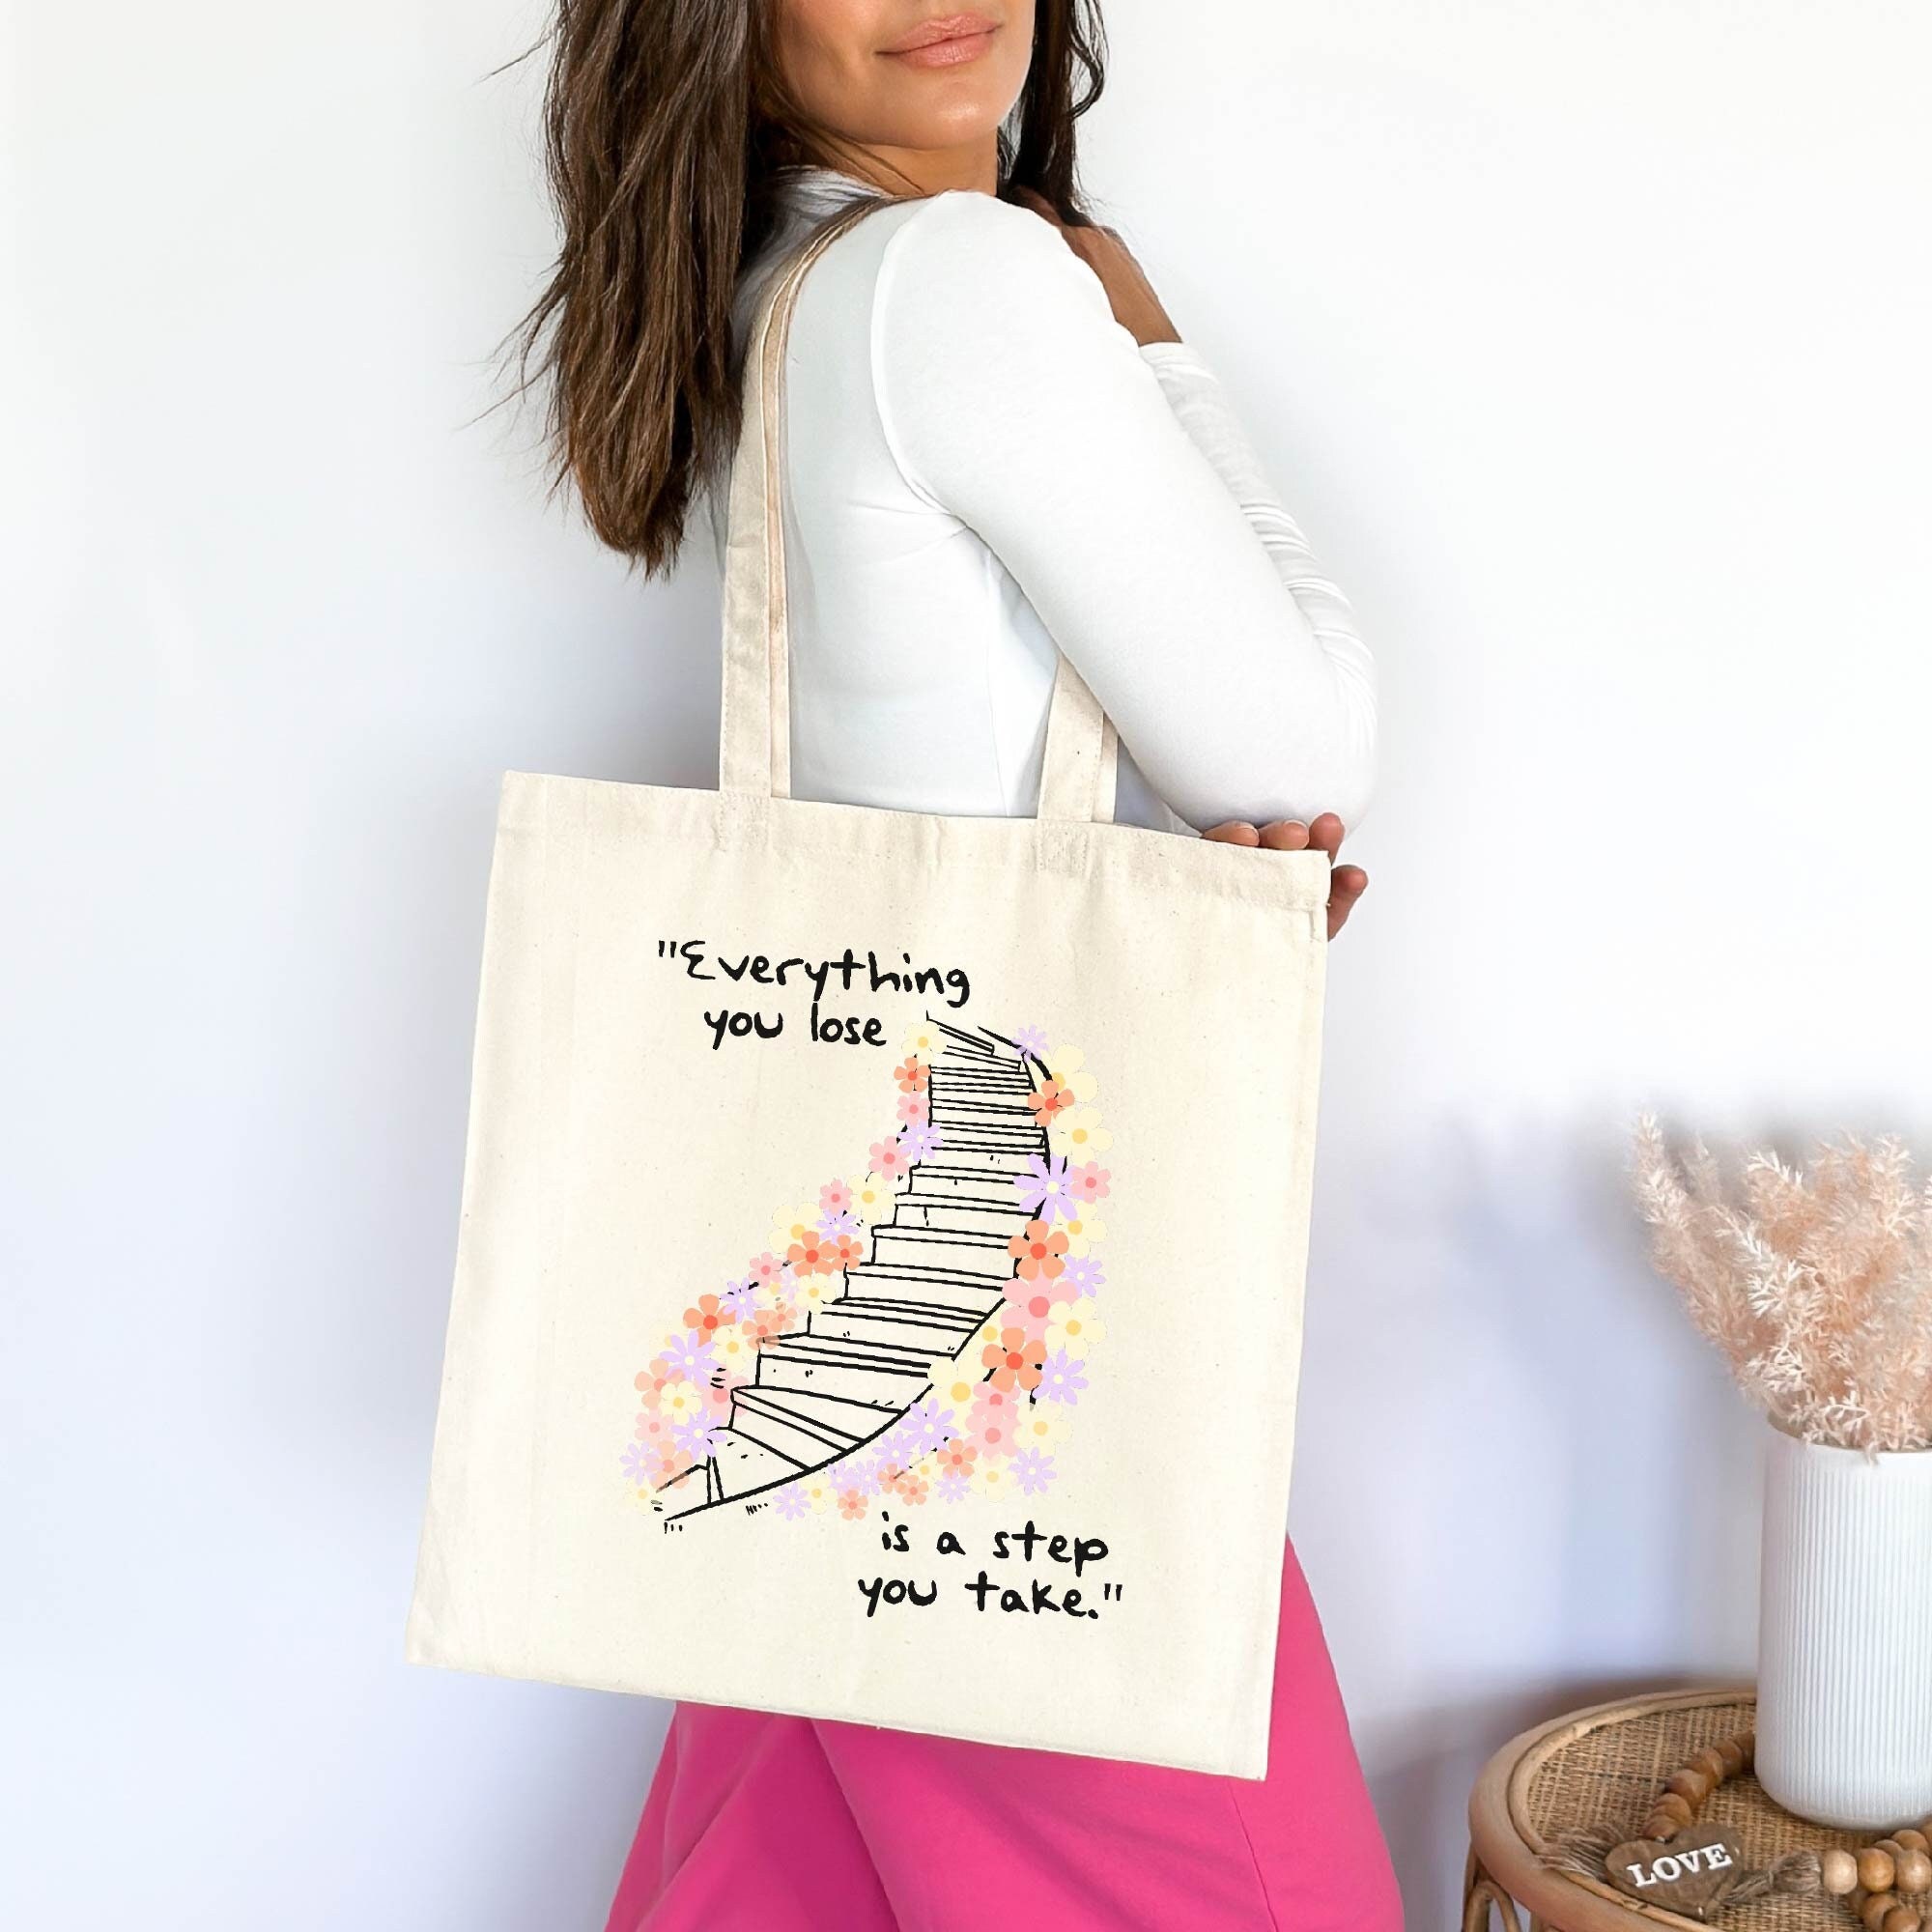 Tote Bag Size Chart - Shop on Pinterest